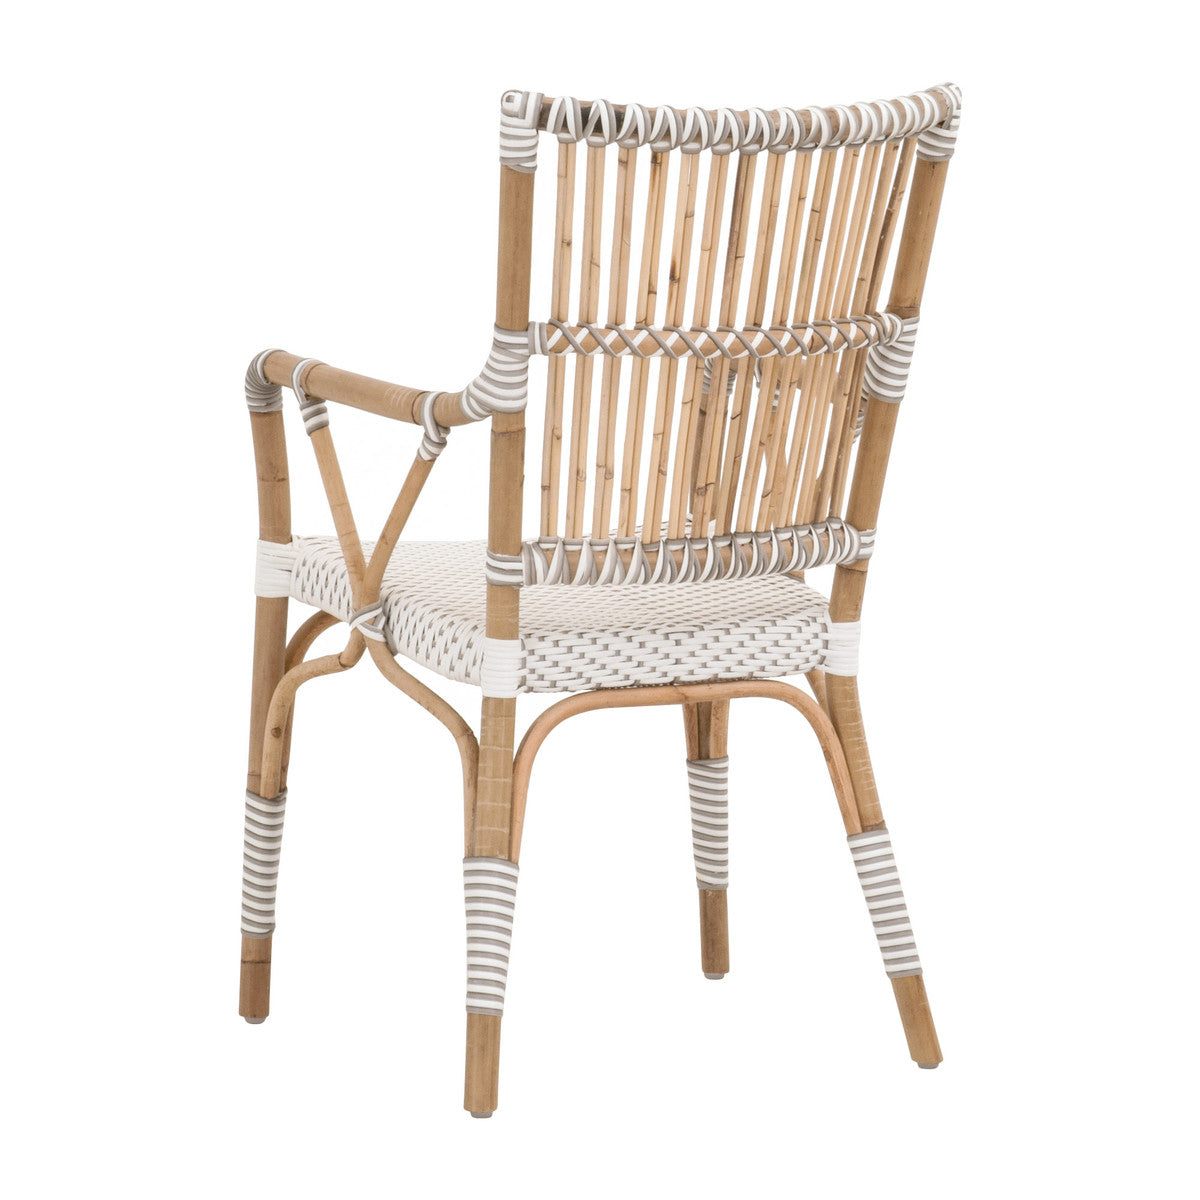 Dorset Arm Chair, set of 2